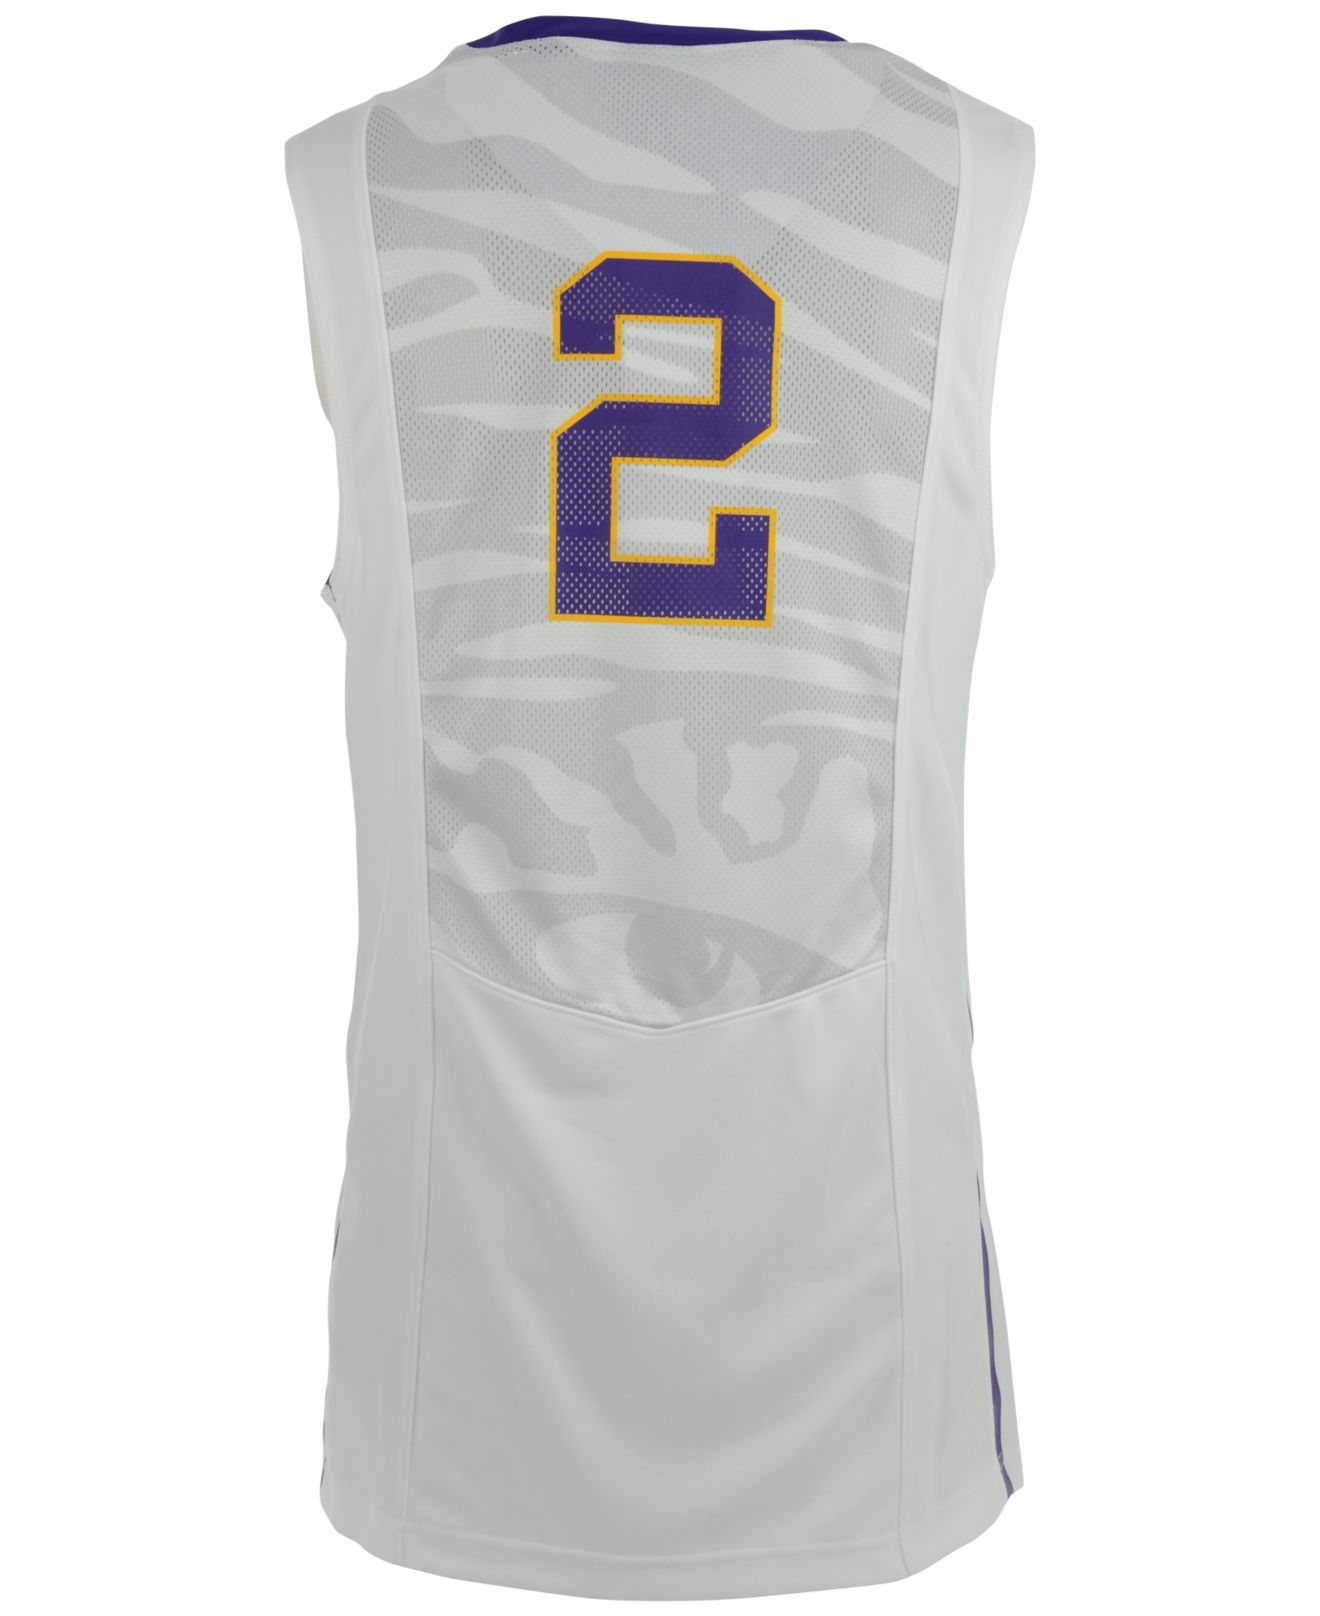 Download Nike Men's Lsu Tigers Replica Basketball Jersey in White ...